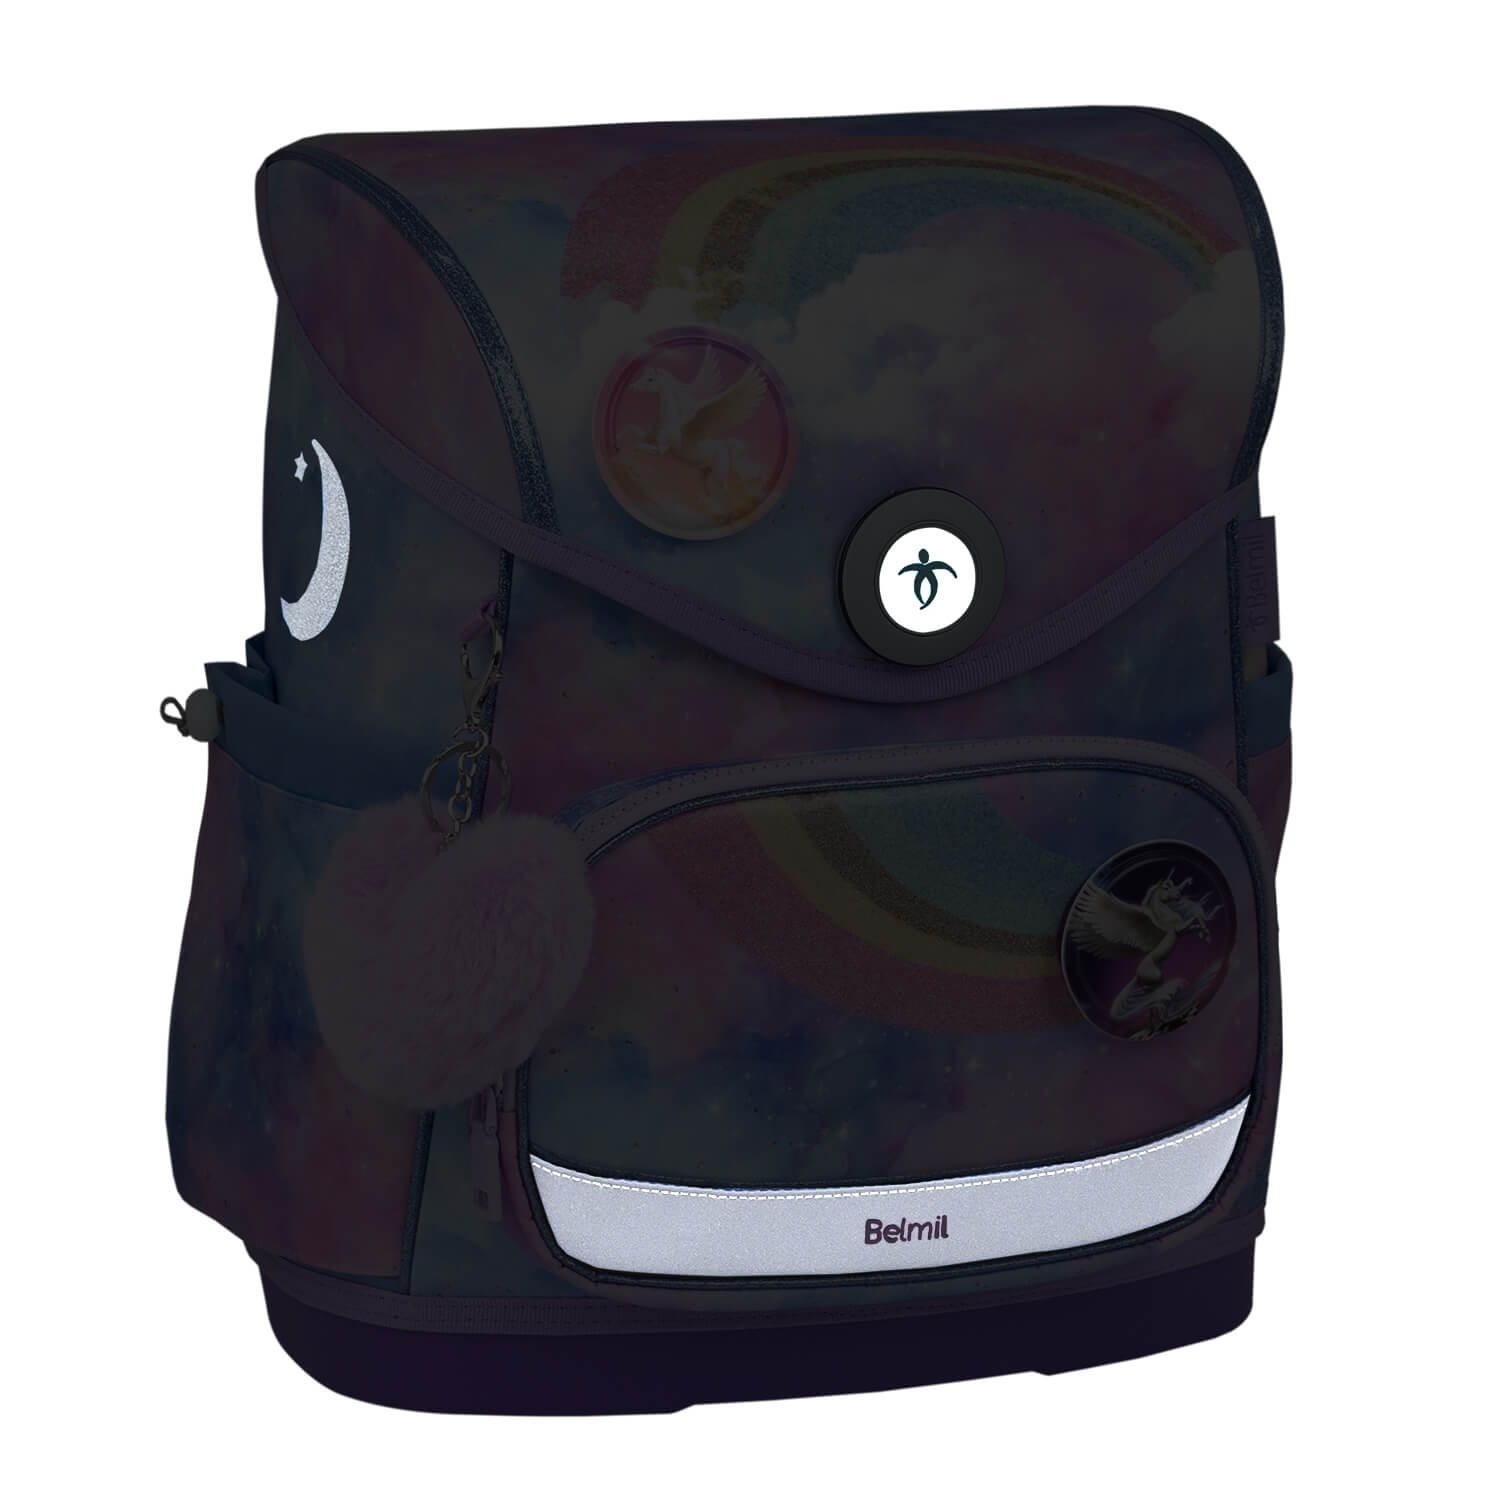 Premium Compact Plus Moonlight Schoolbag set 5pcs.